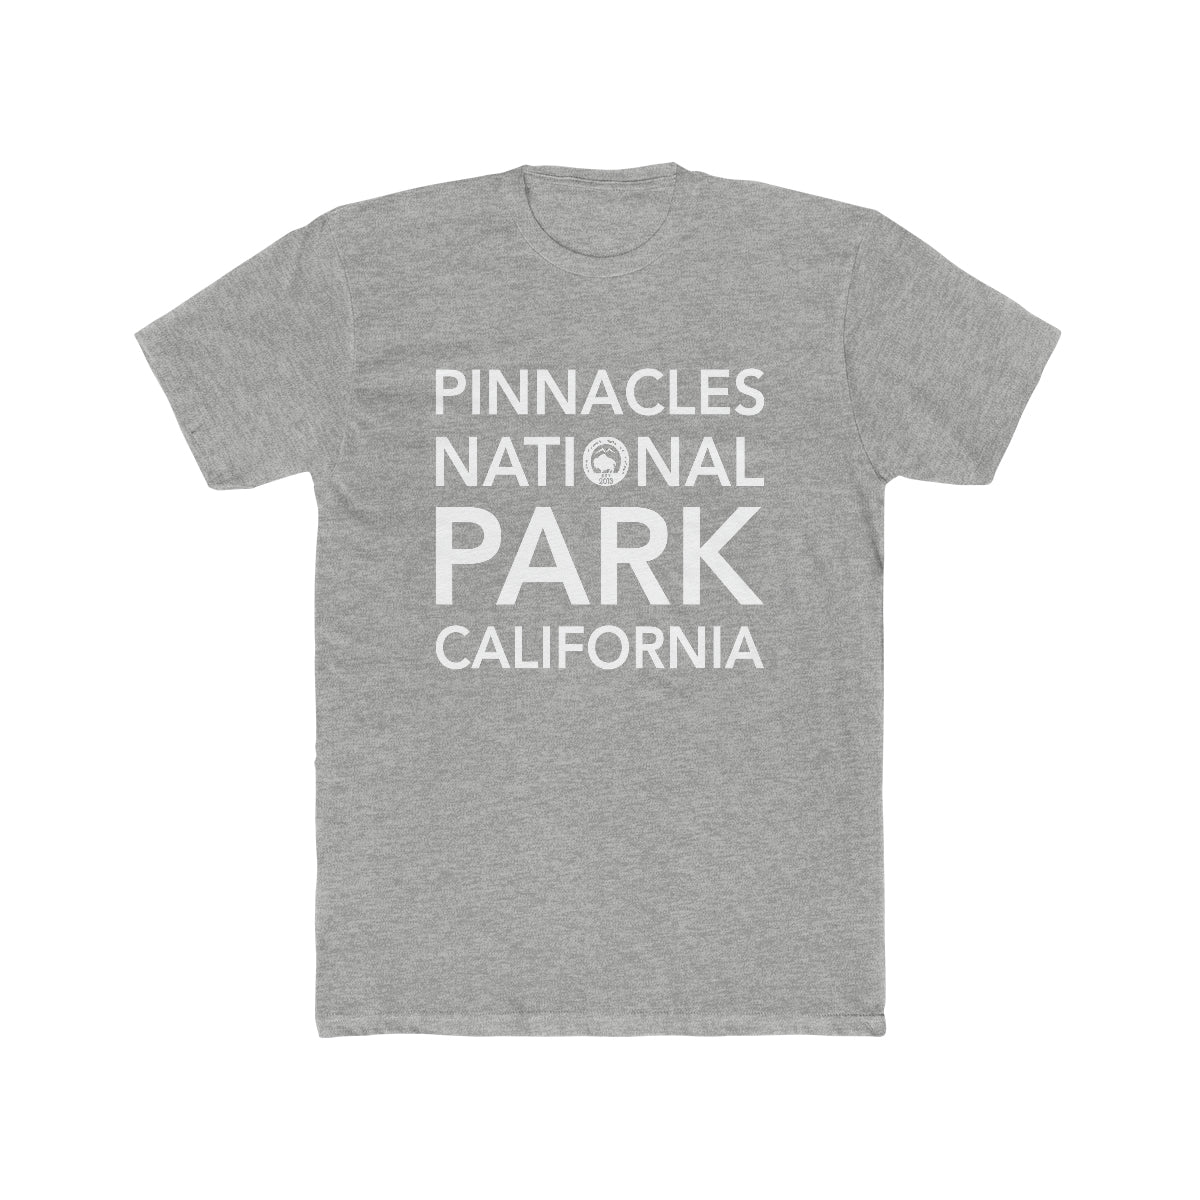 Pinnacles National Park T-Shirt Block Text